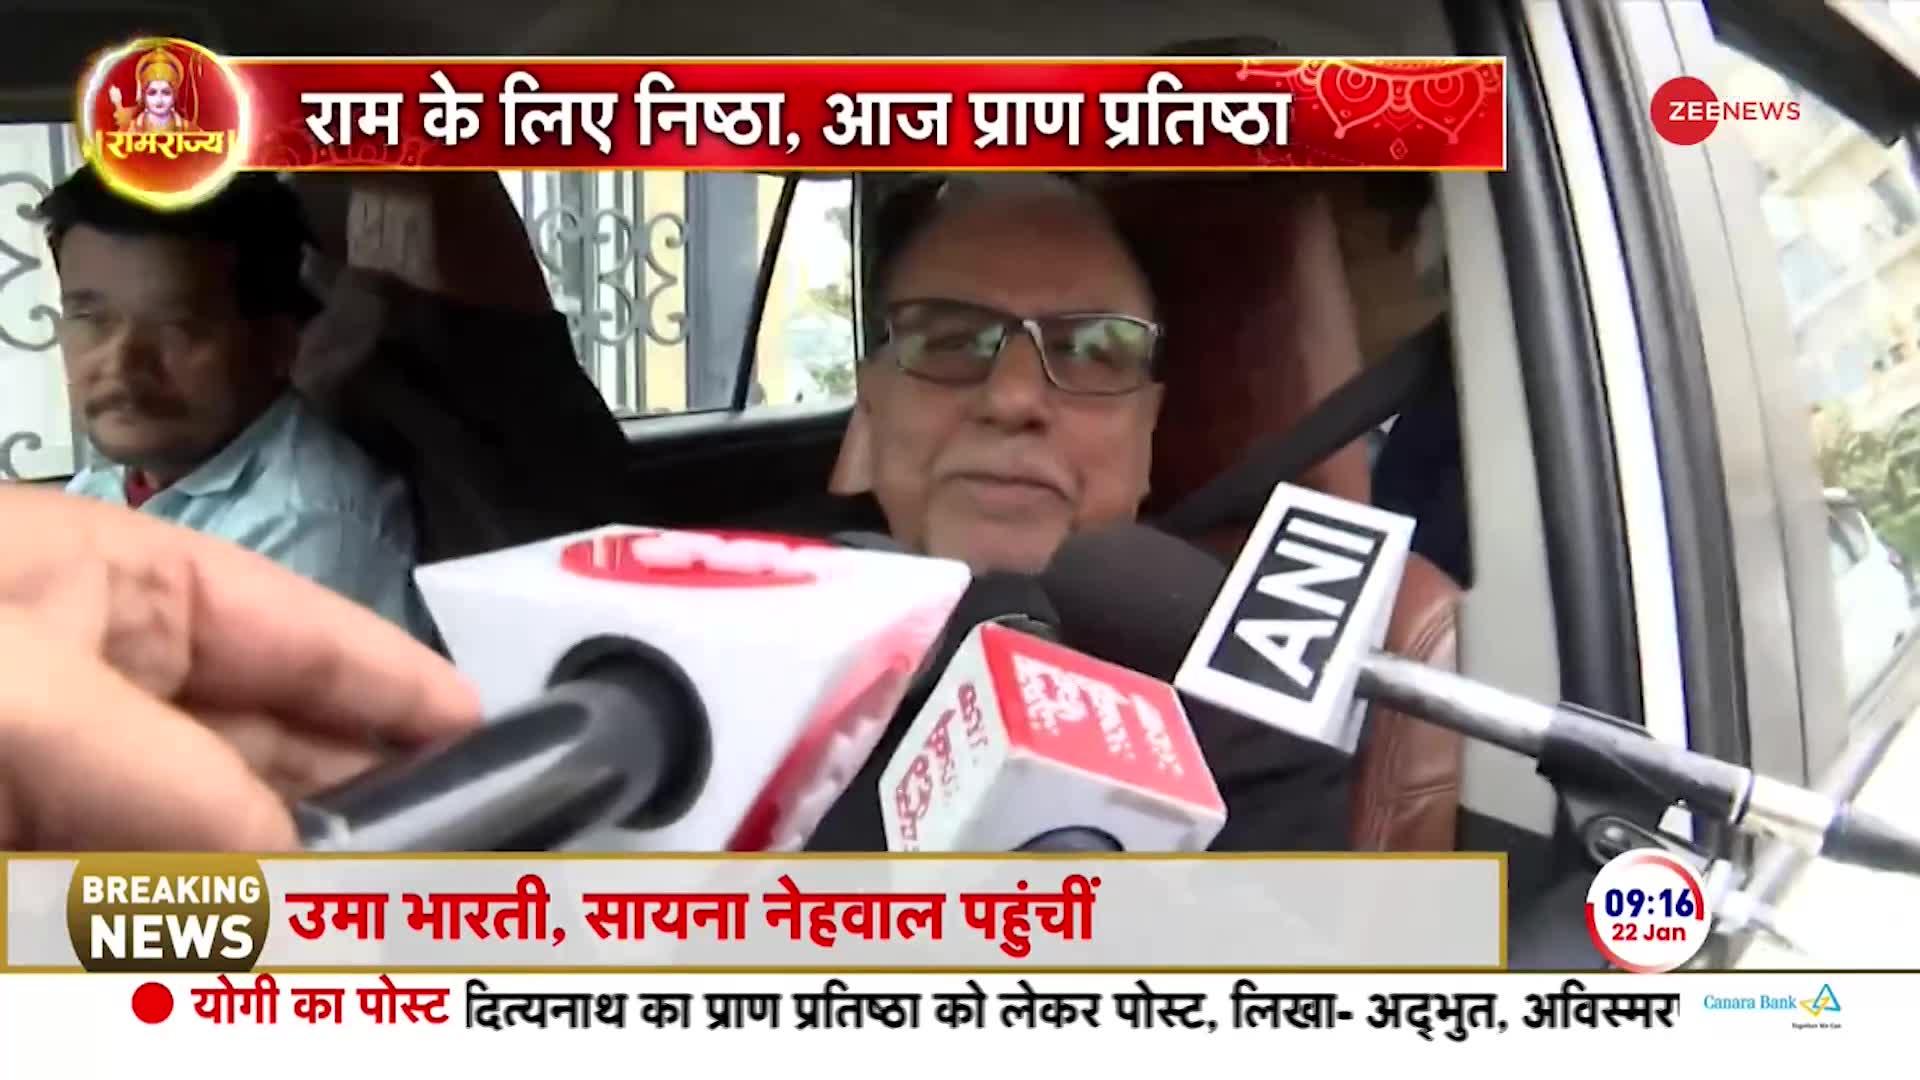 Ayodhya Ram Mandir: Dr. Subhash Chandra expressed his happiness regarding the Ram Temple